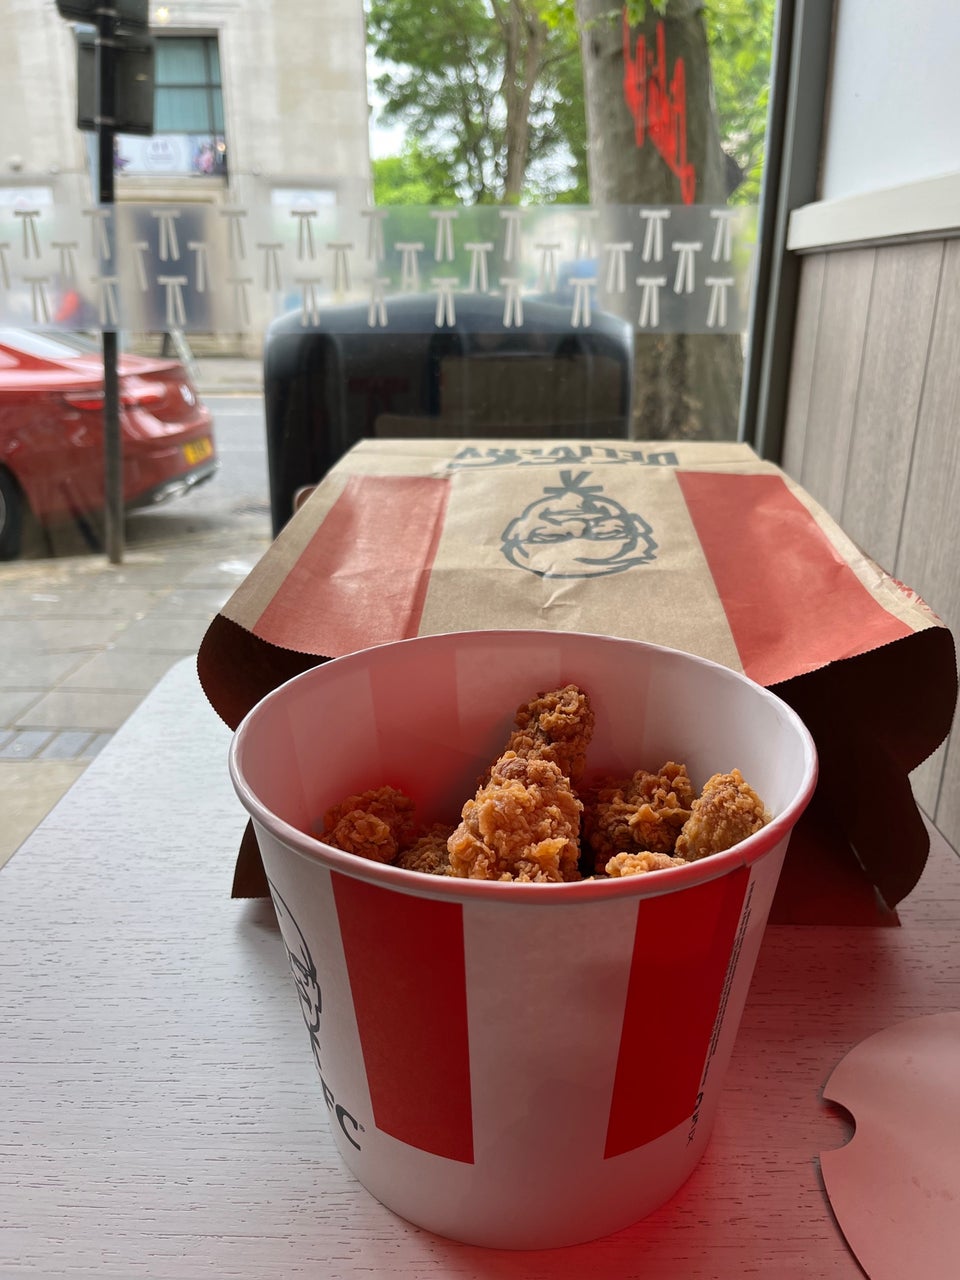 KFC Ealing - The Mall